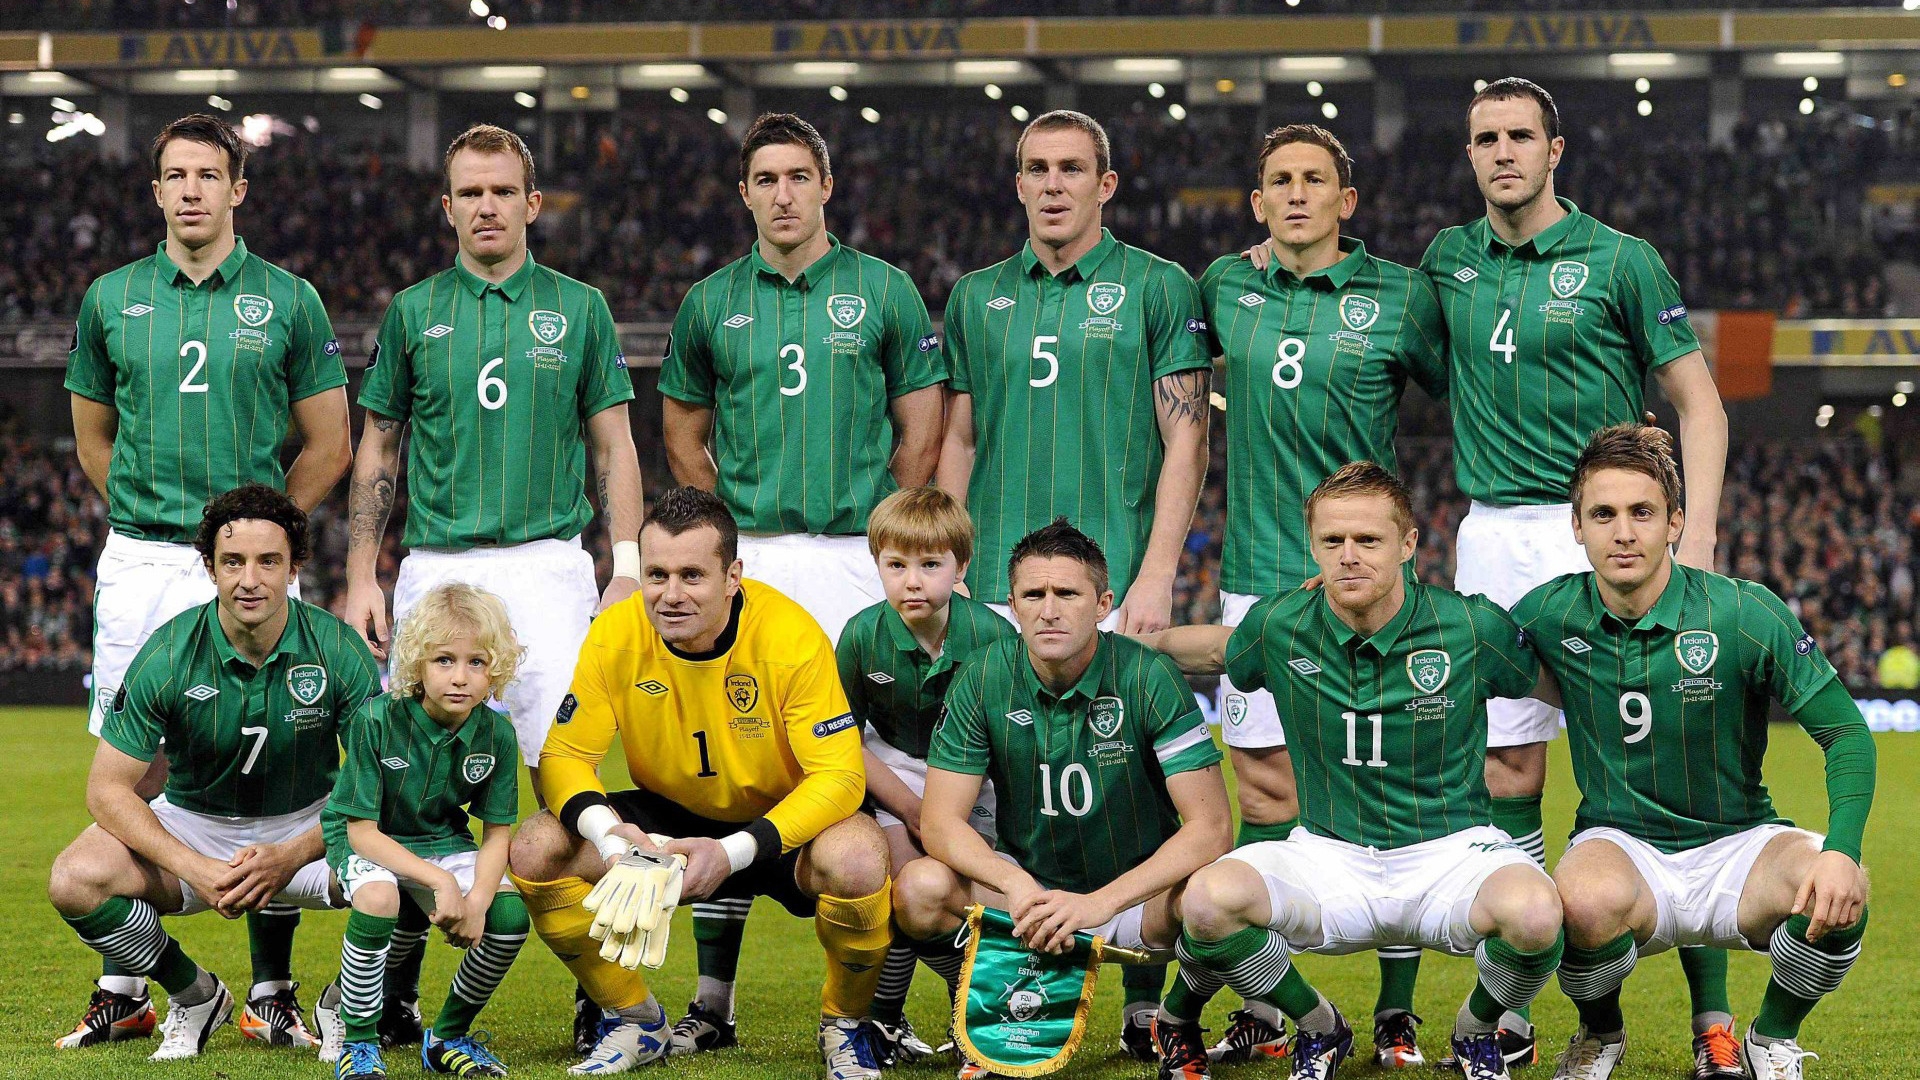 Ireland National Team for 1920 x 1080 HDTV 1080p resolution